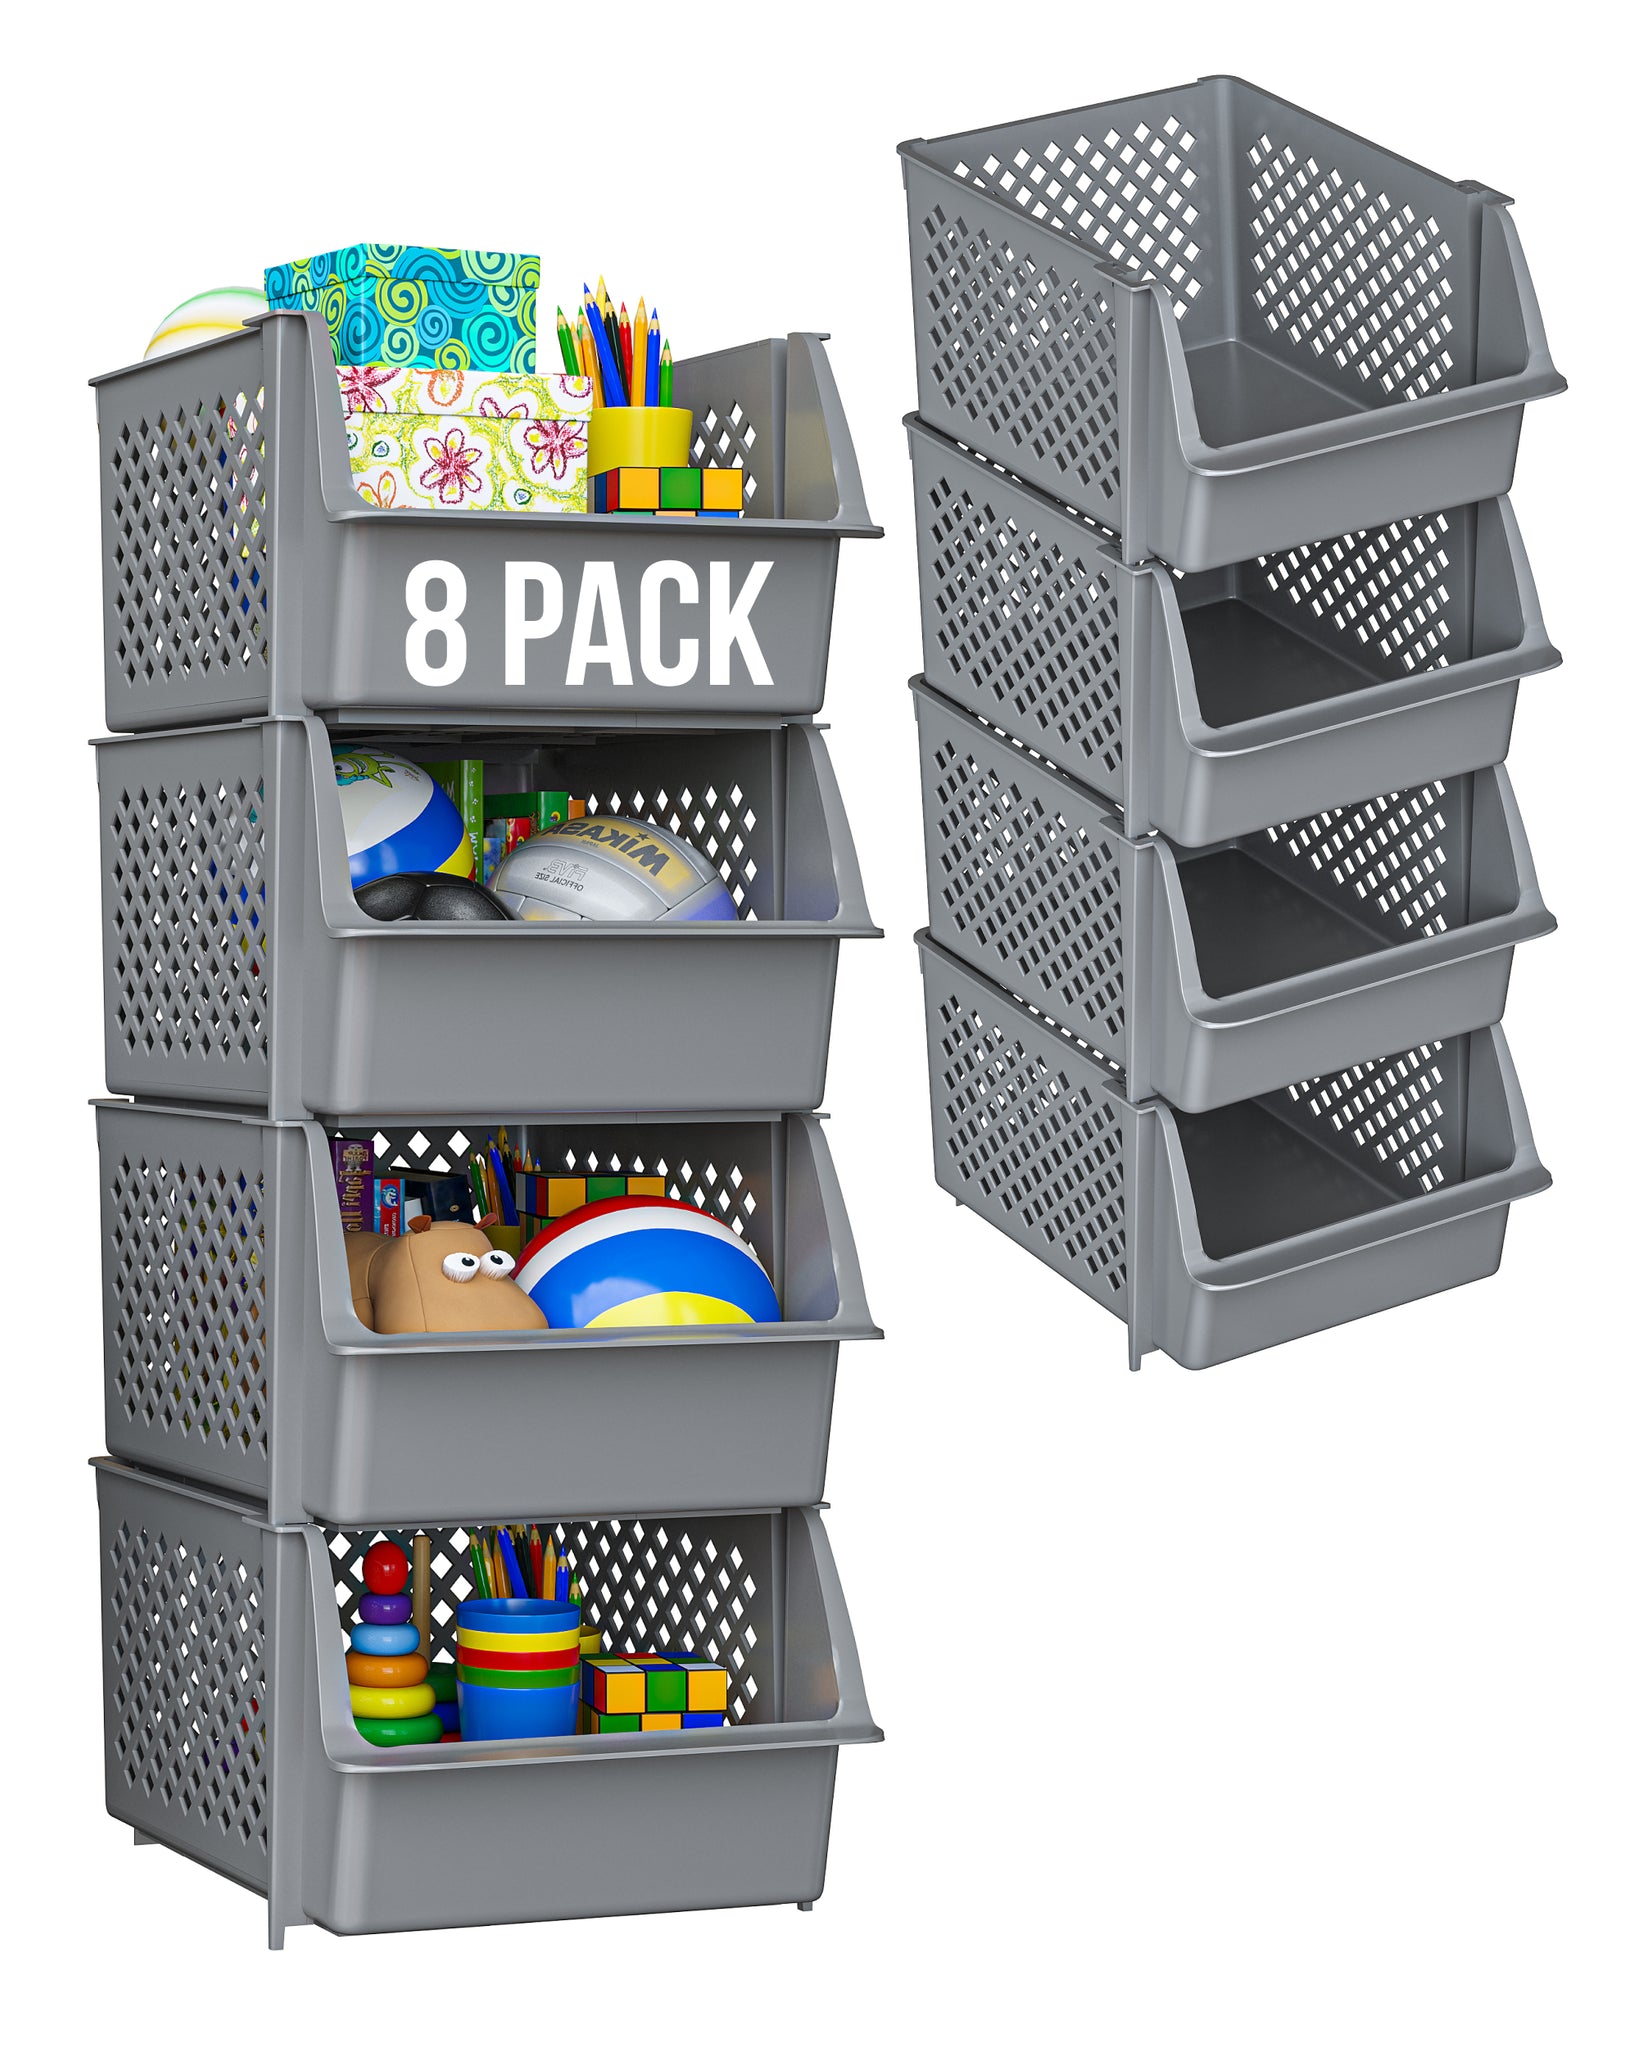 Casewin Plastic Storage Baskets, Plastic Storage Boxes, Stackable